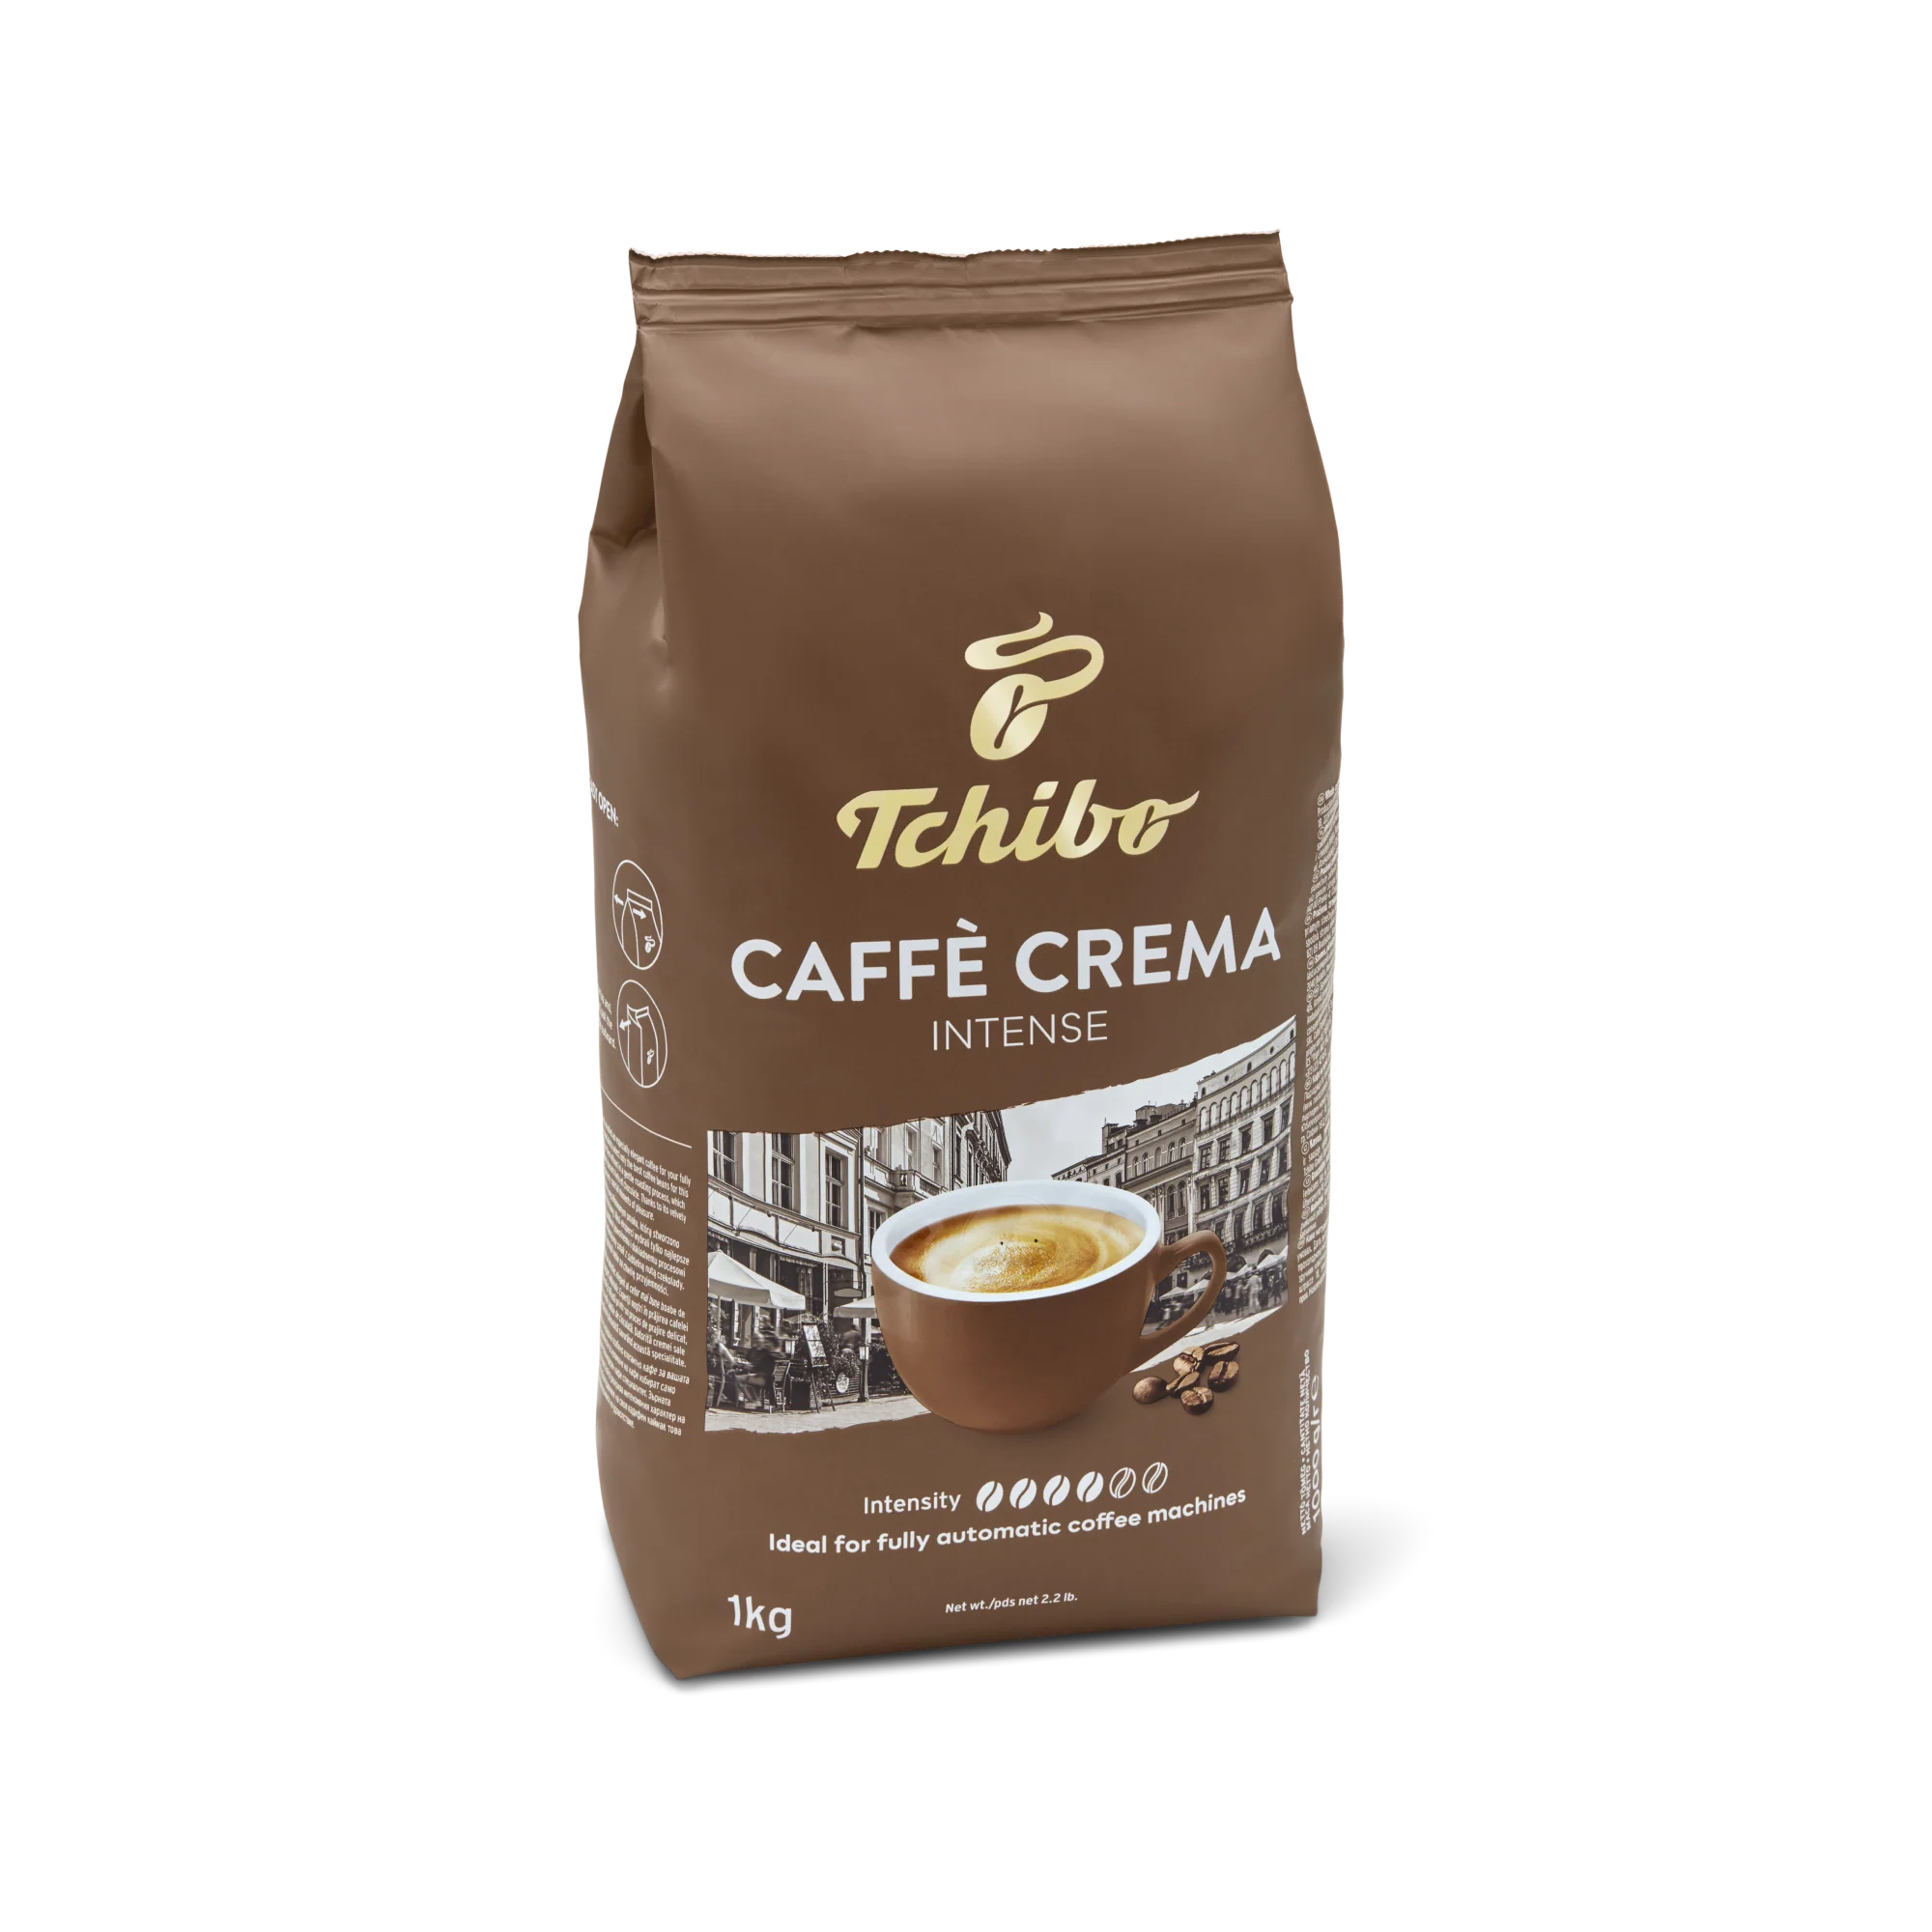 Caffé Crema Intense 17.6oz/35.2oz (Subscription)